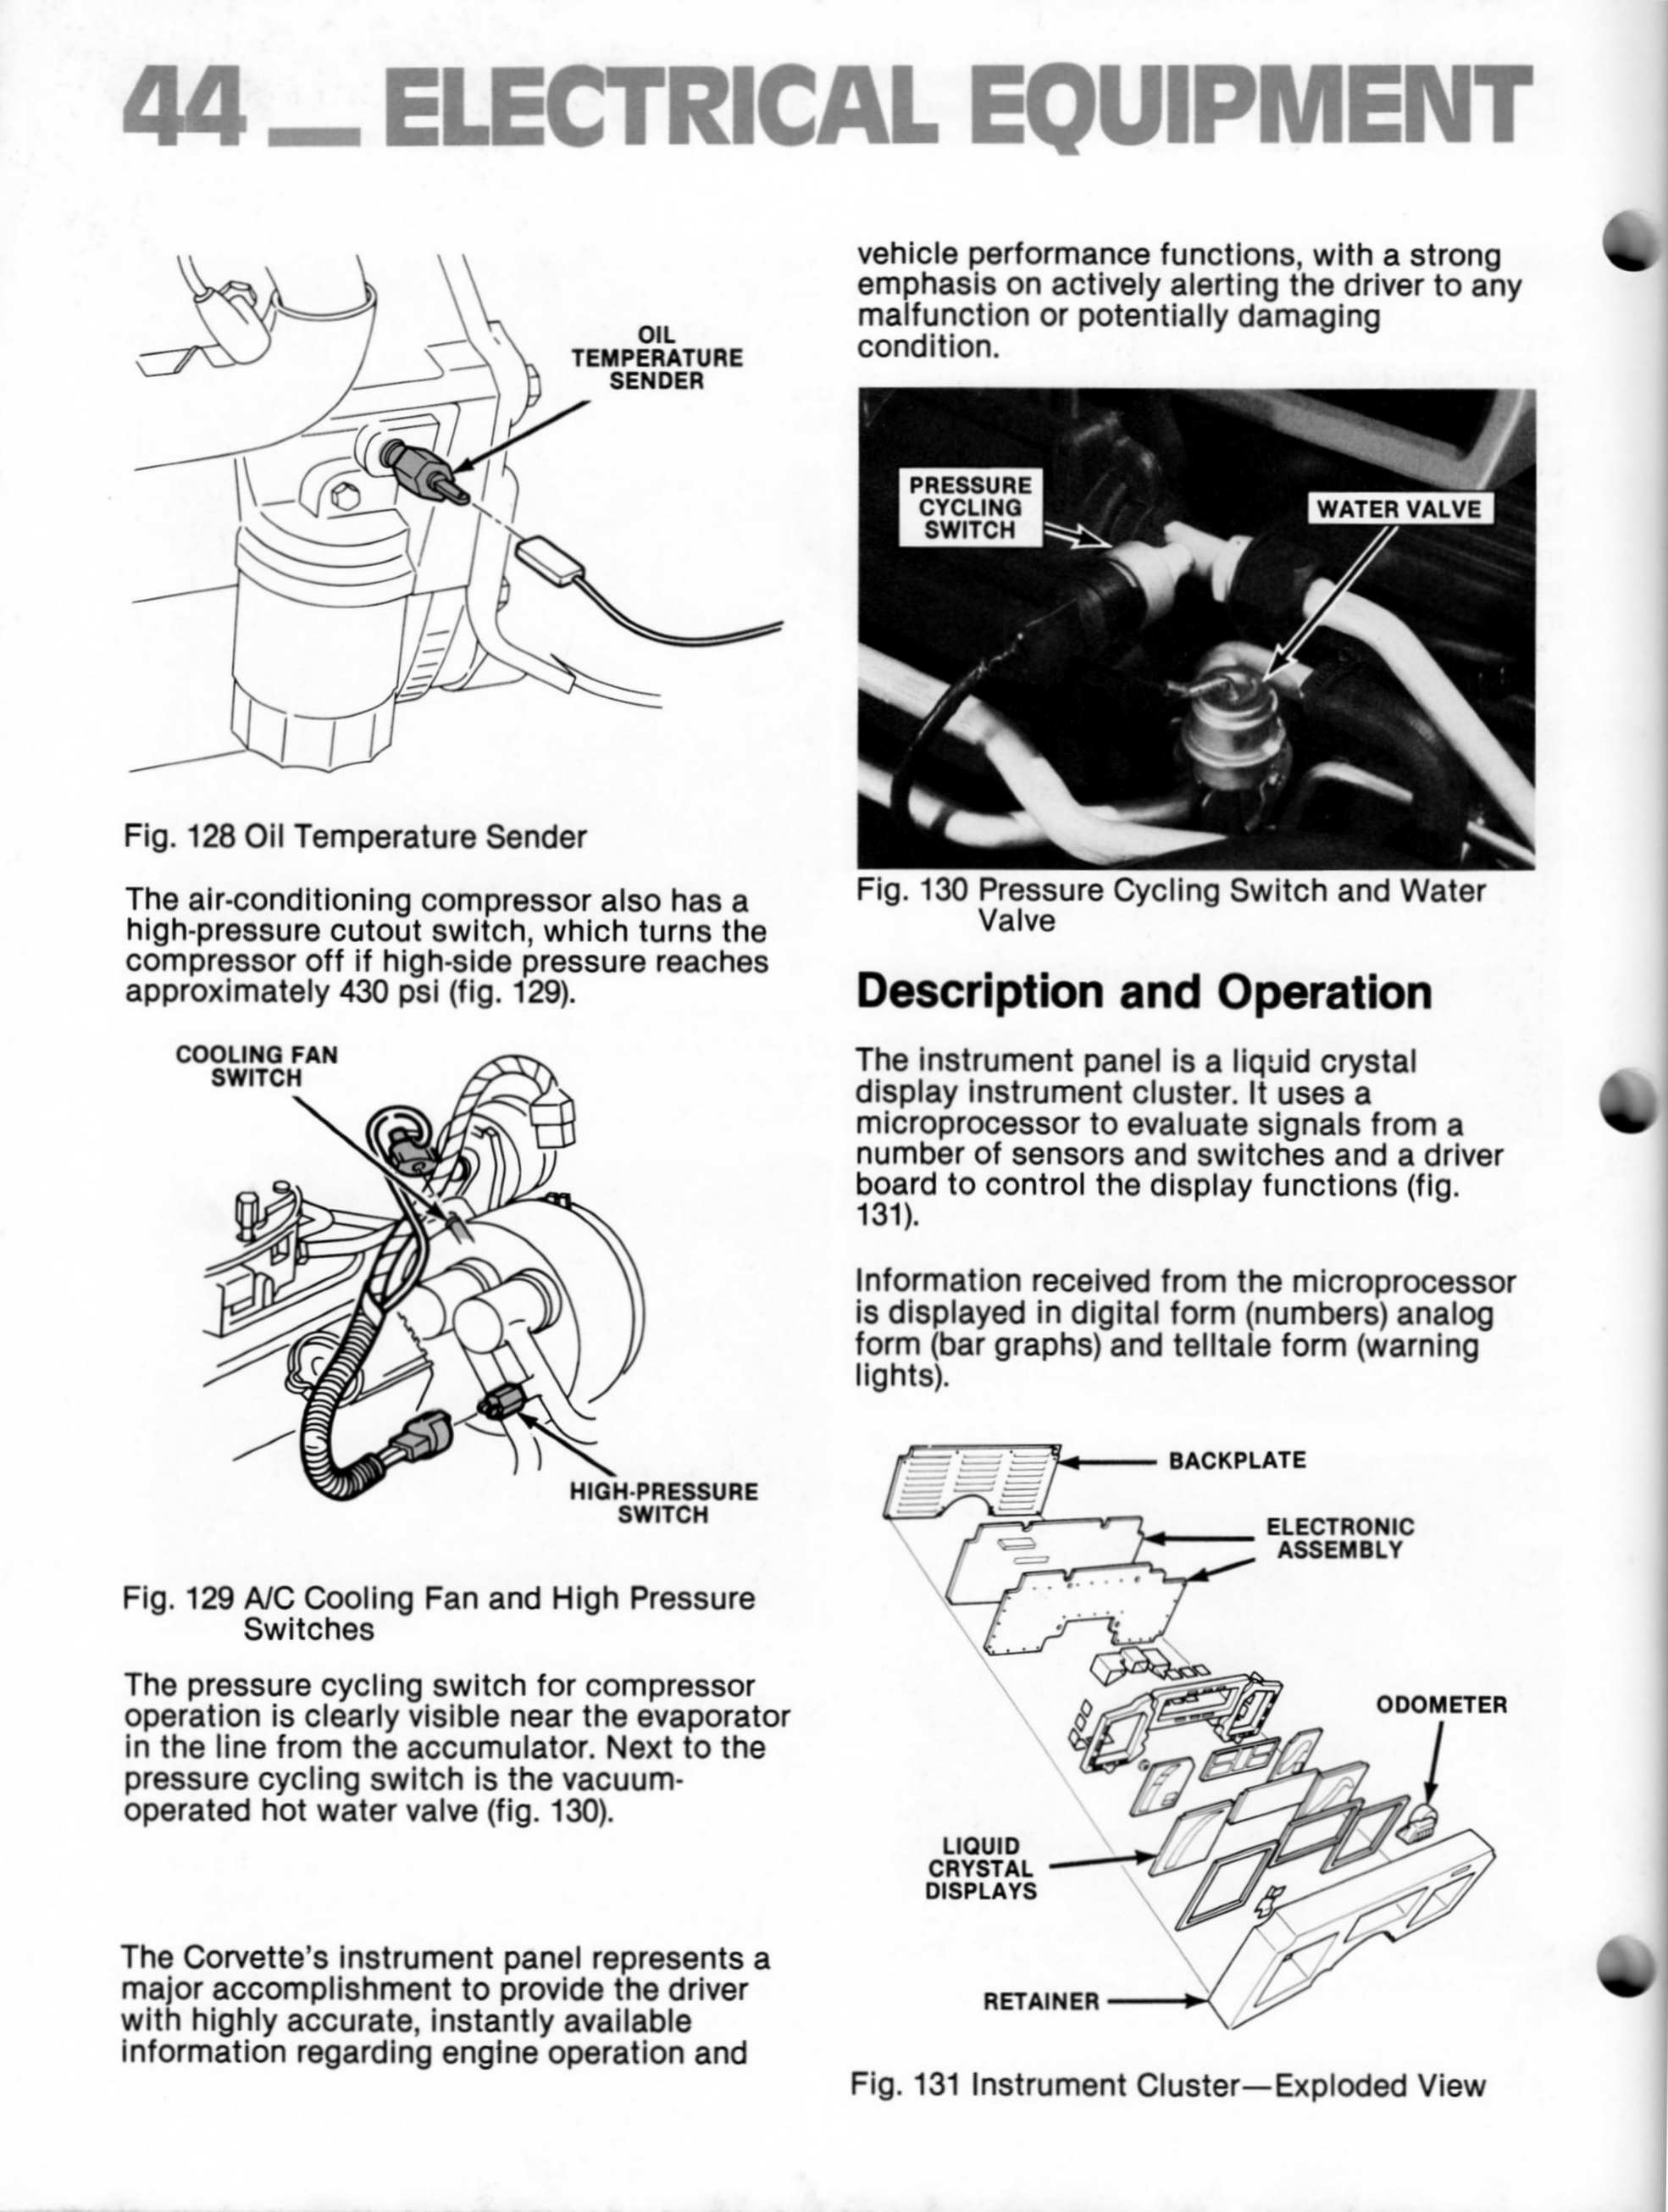 1984_Corvette_Service_Manual-44